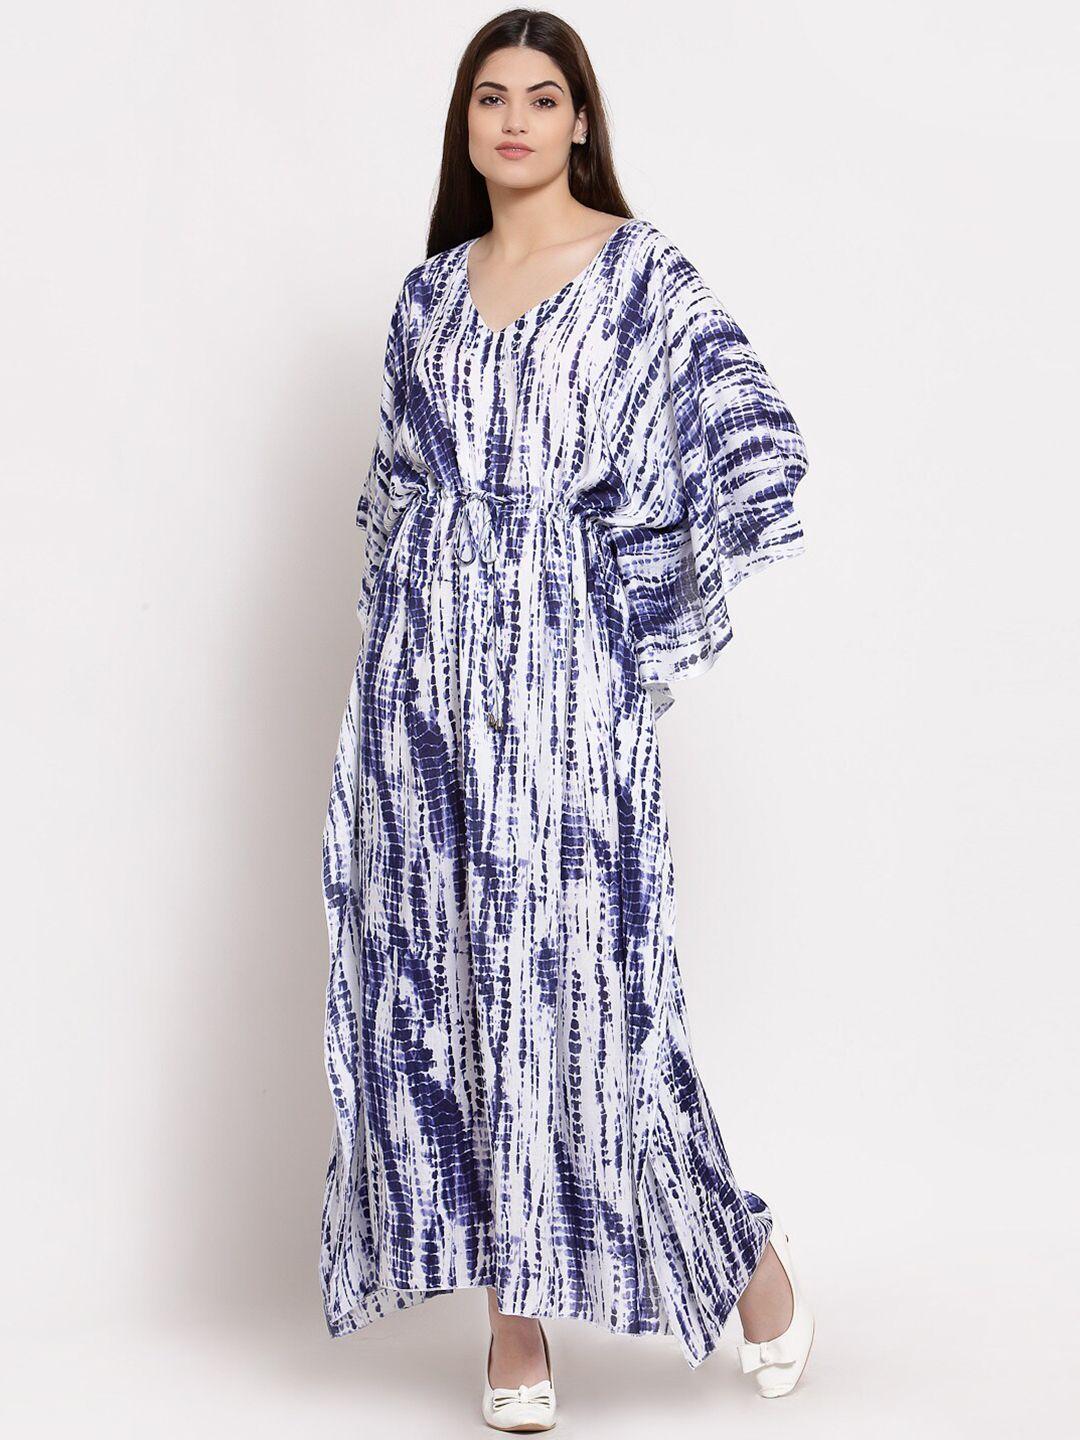 patrorna women navy blue printed maxi nightdress